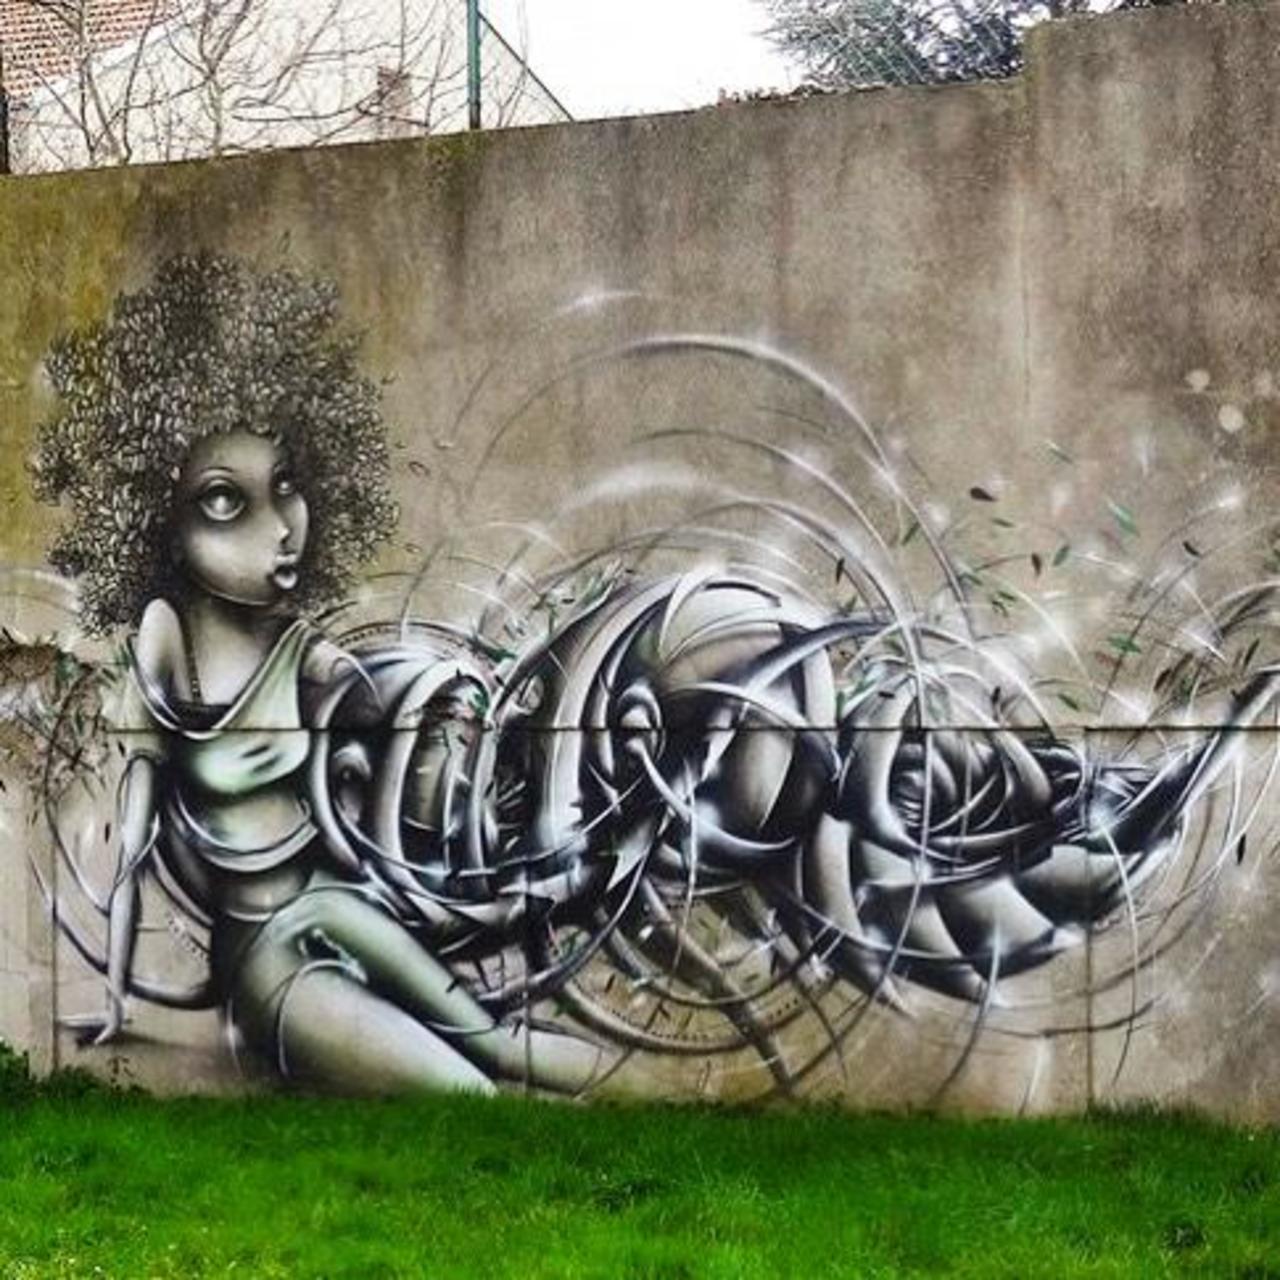 #Paris #graffiti photo by @jeanlucr http://ift.tt/1R7WmNj #StreetArt http://t.co/DCLJ4Htf2f